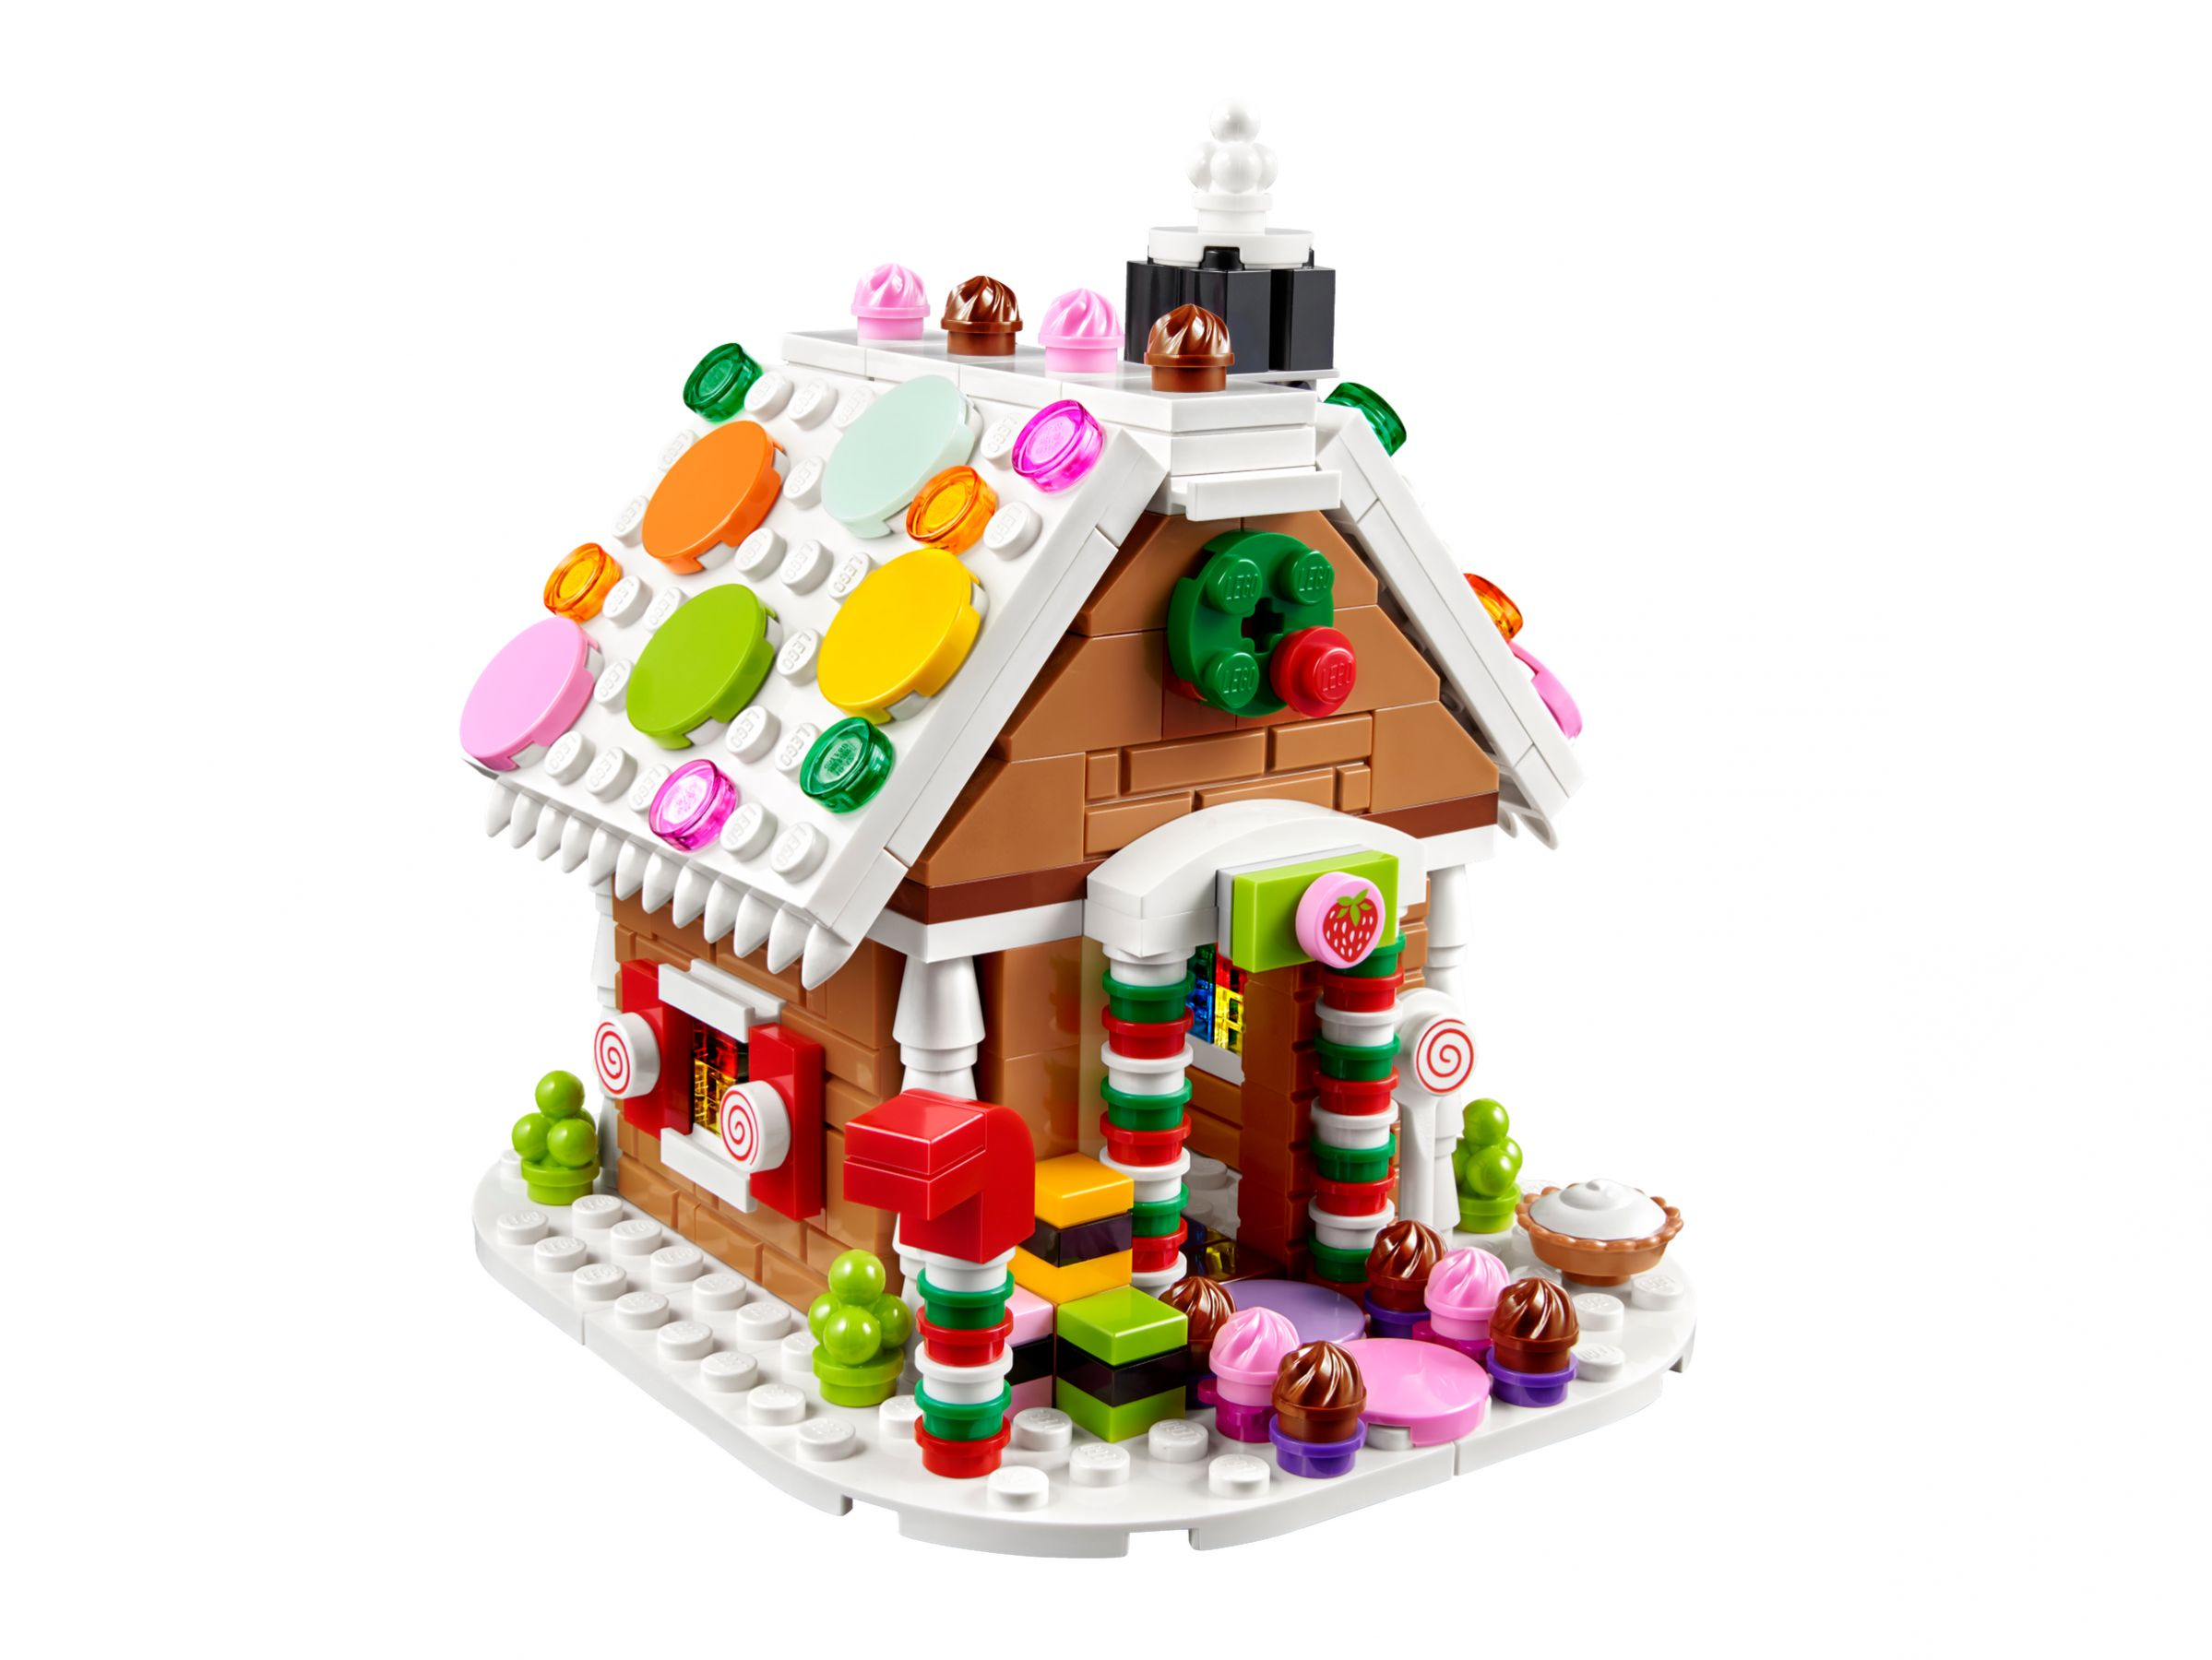 40139 Lebkuchenhaus Bausatz LEGO